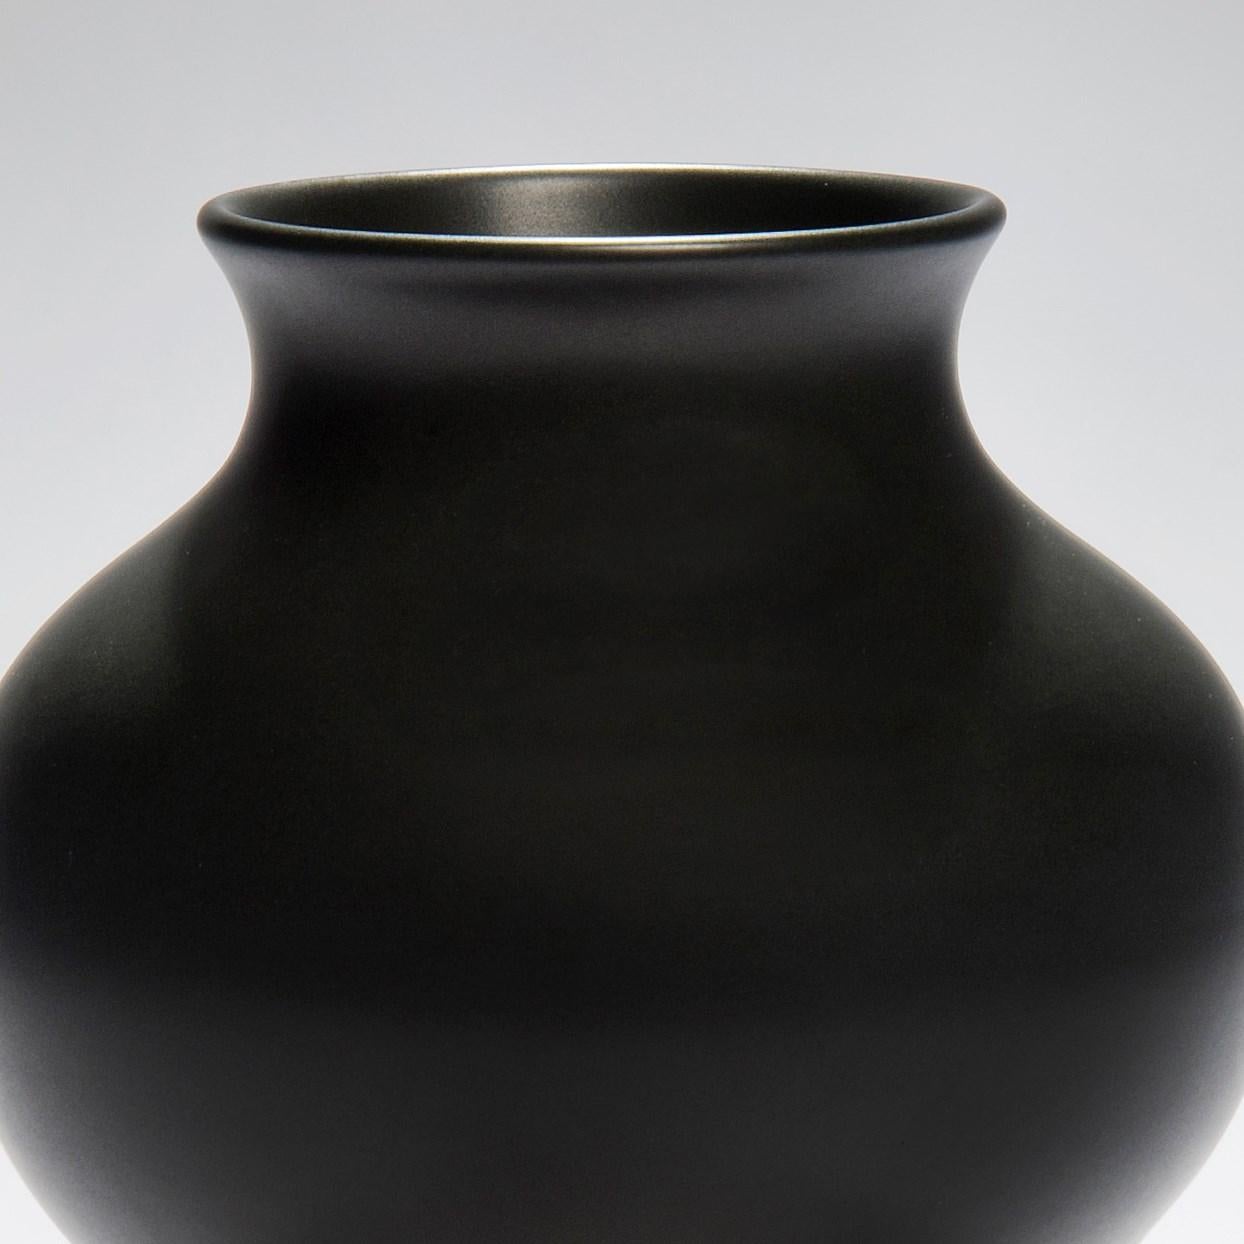 Organic Modern Balluster Vase, a unique black / ebony porcelain vase by Vivienne Foley